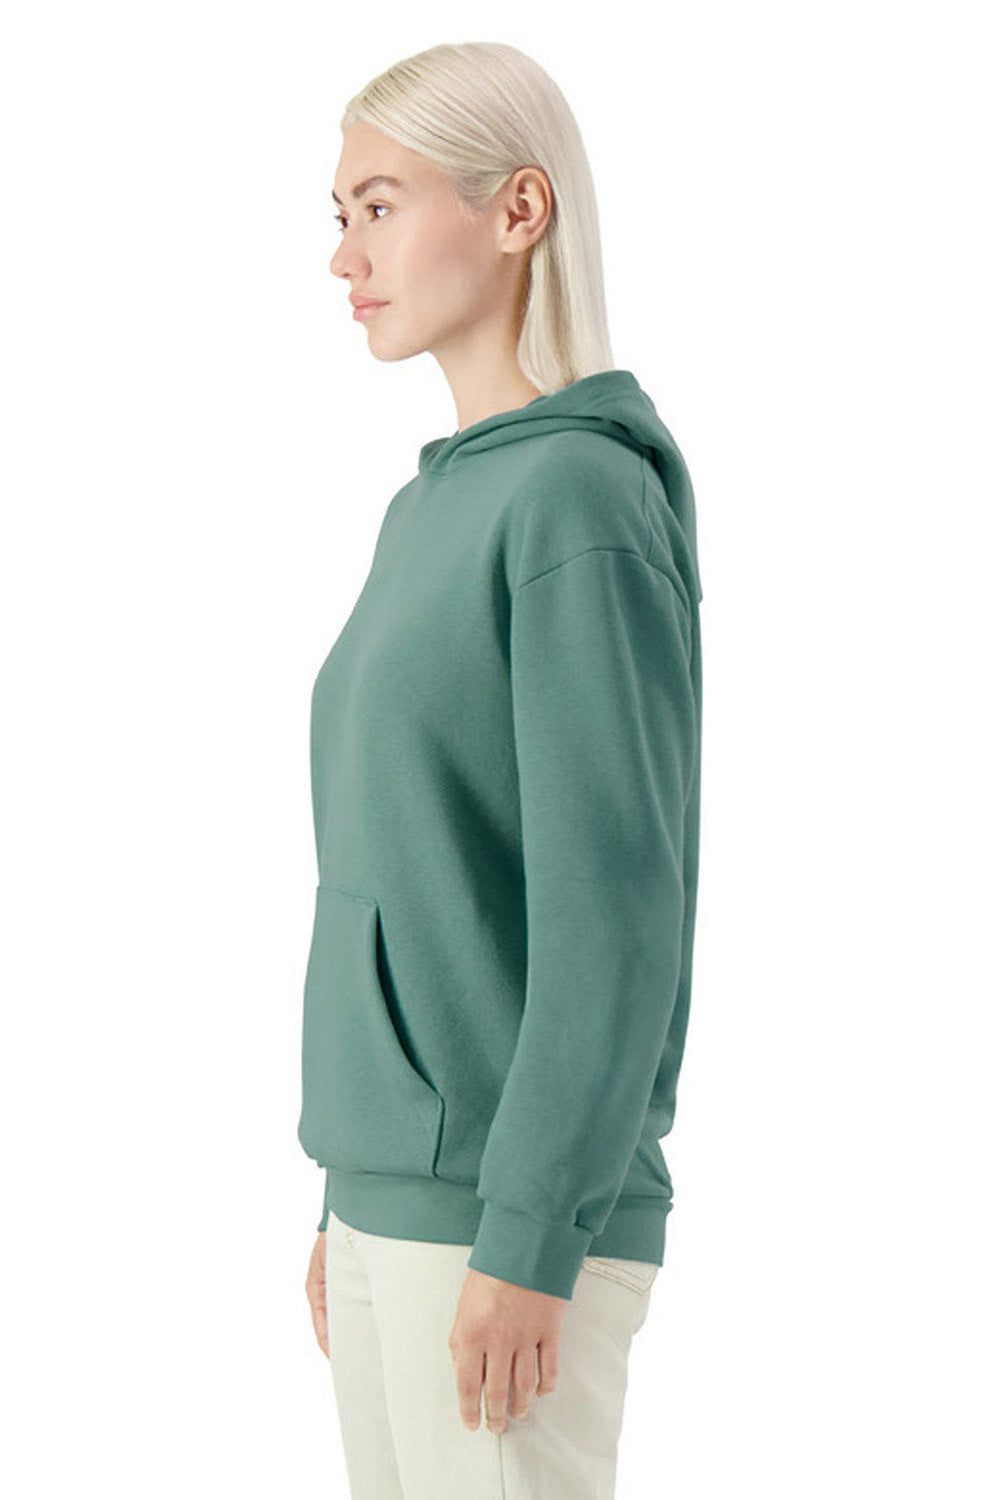 American Apparel RF498 Mens ReFlex Fleece Hooded Sweatshirt Hoodie Arctic Green Model Side